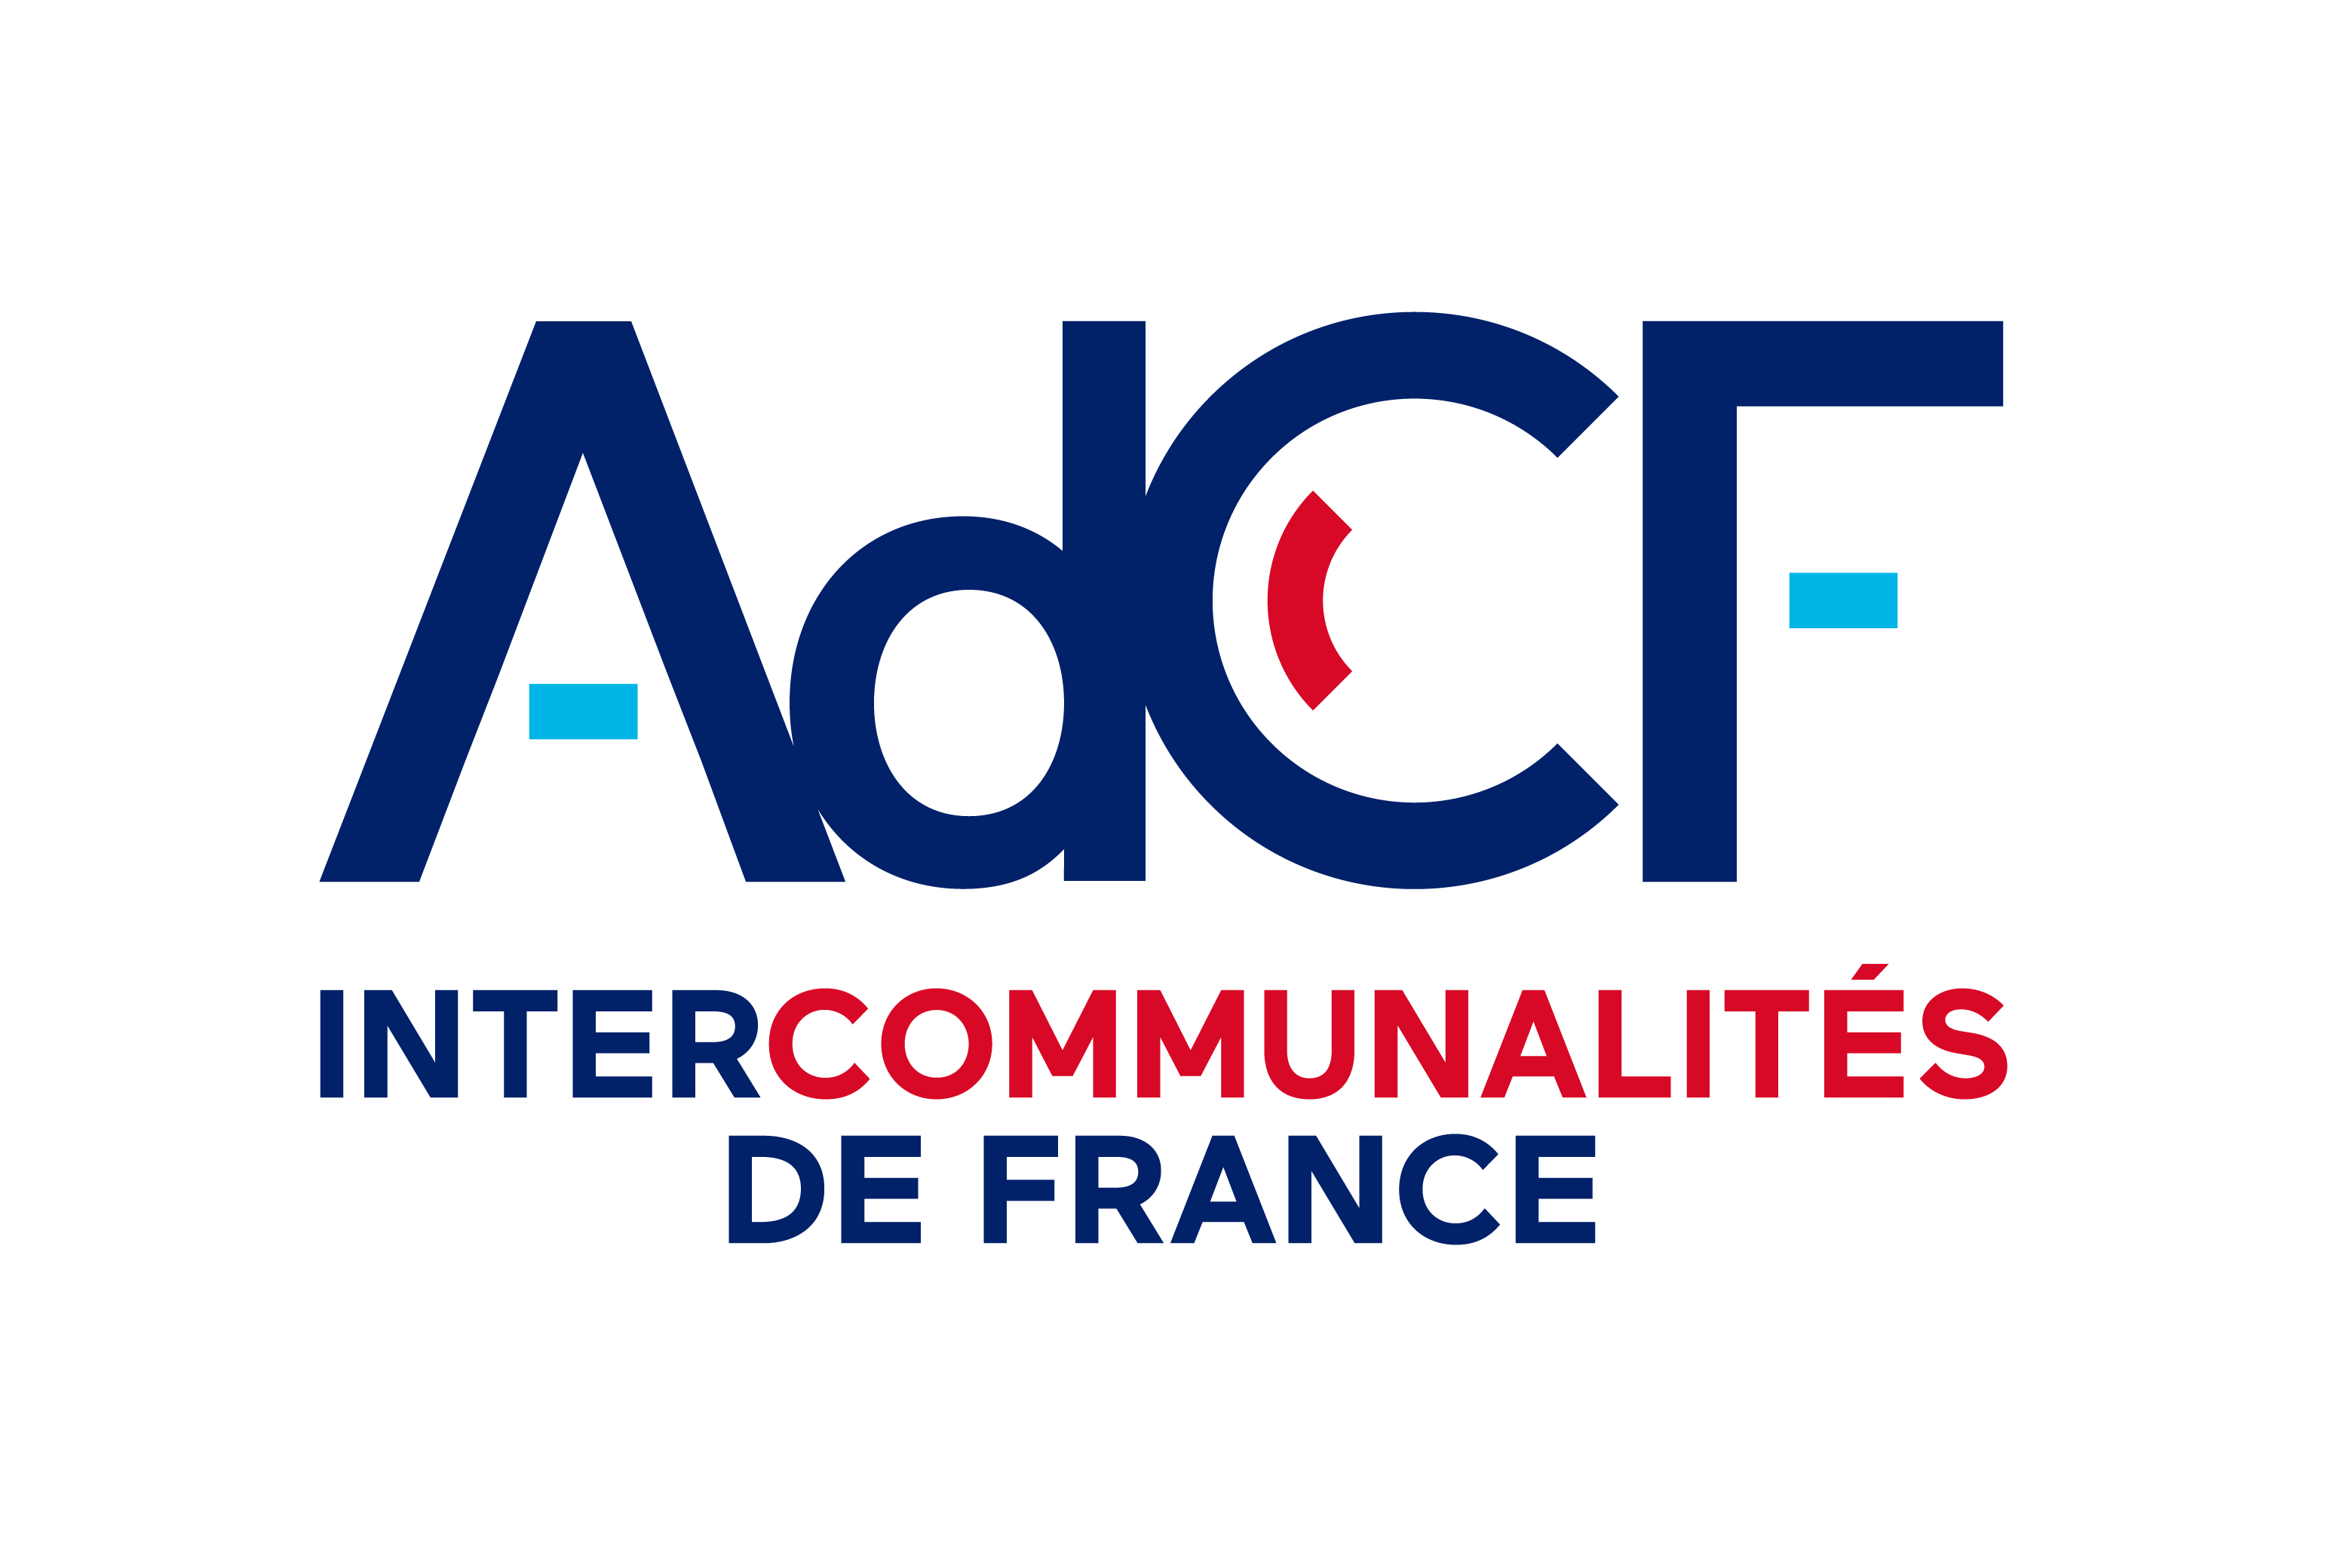 Logo ADCF